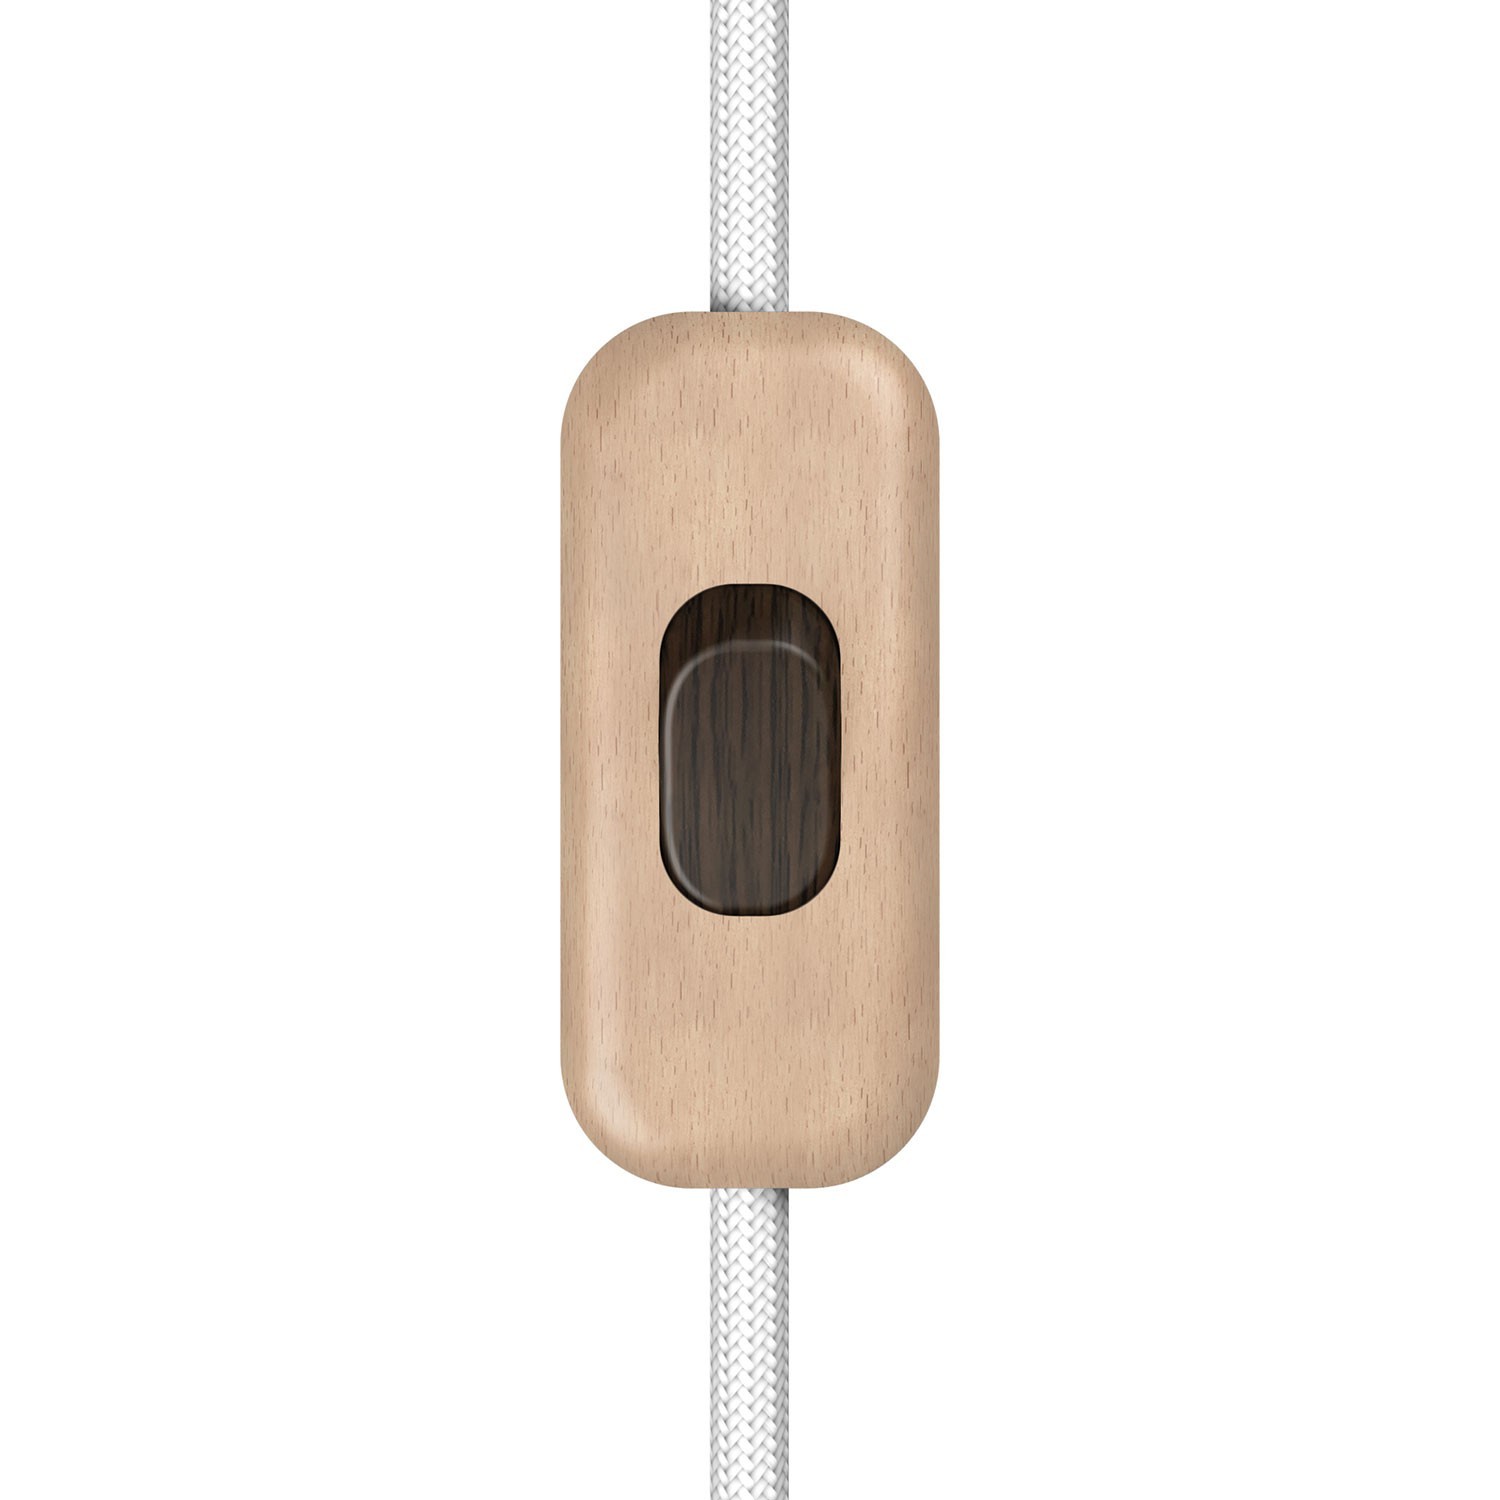 Inline single-pole switch Creative Switch beechwood colour